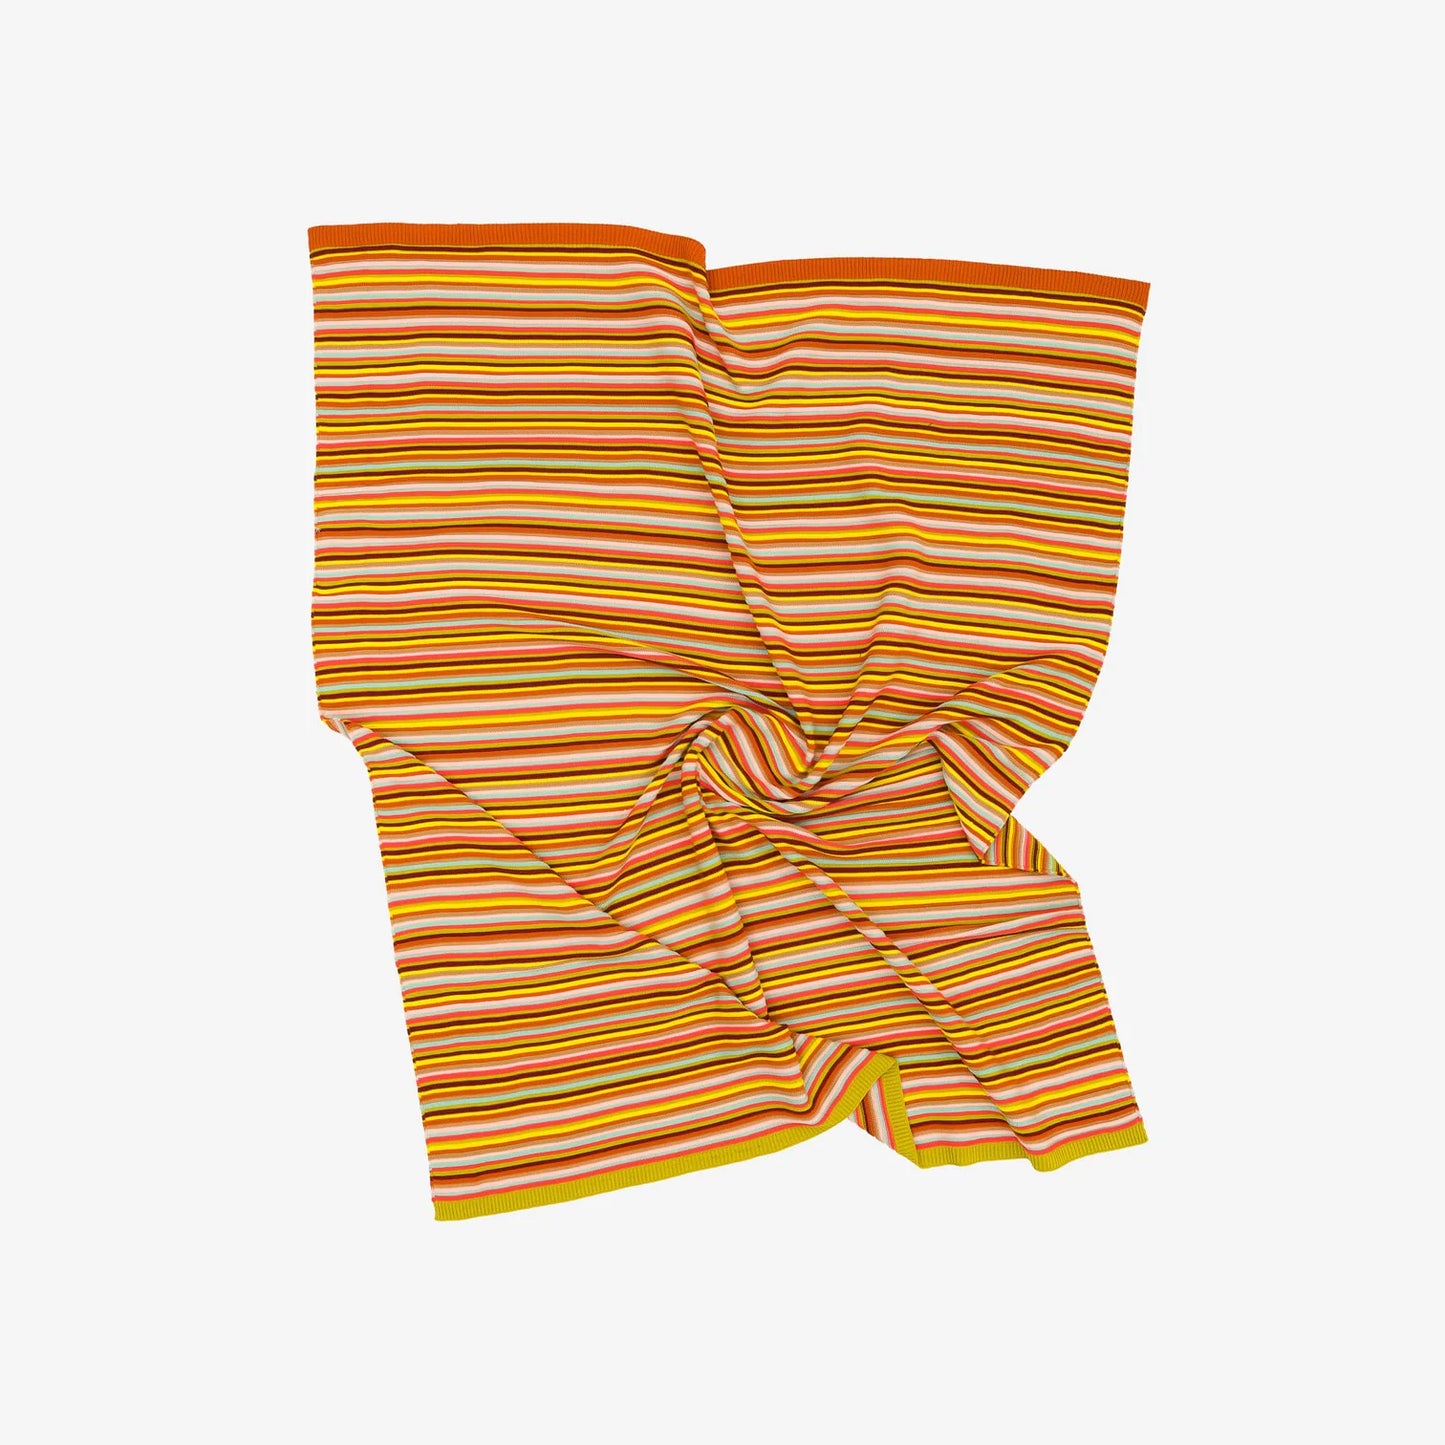 Desert Circus Stripe Knit Throw